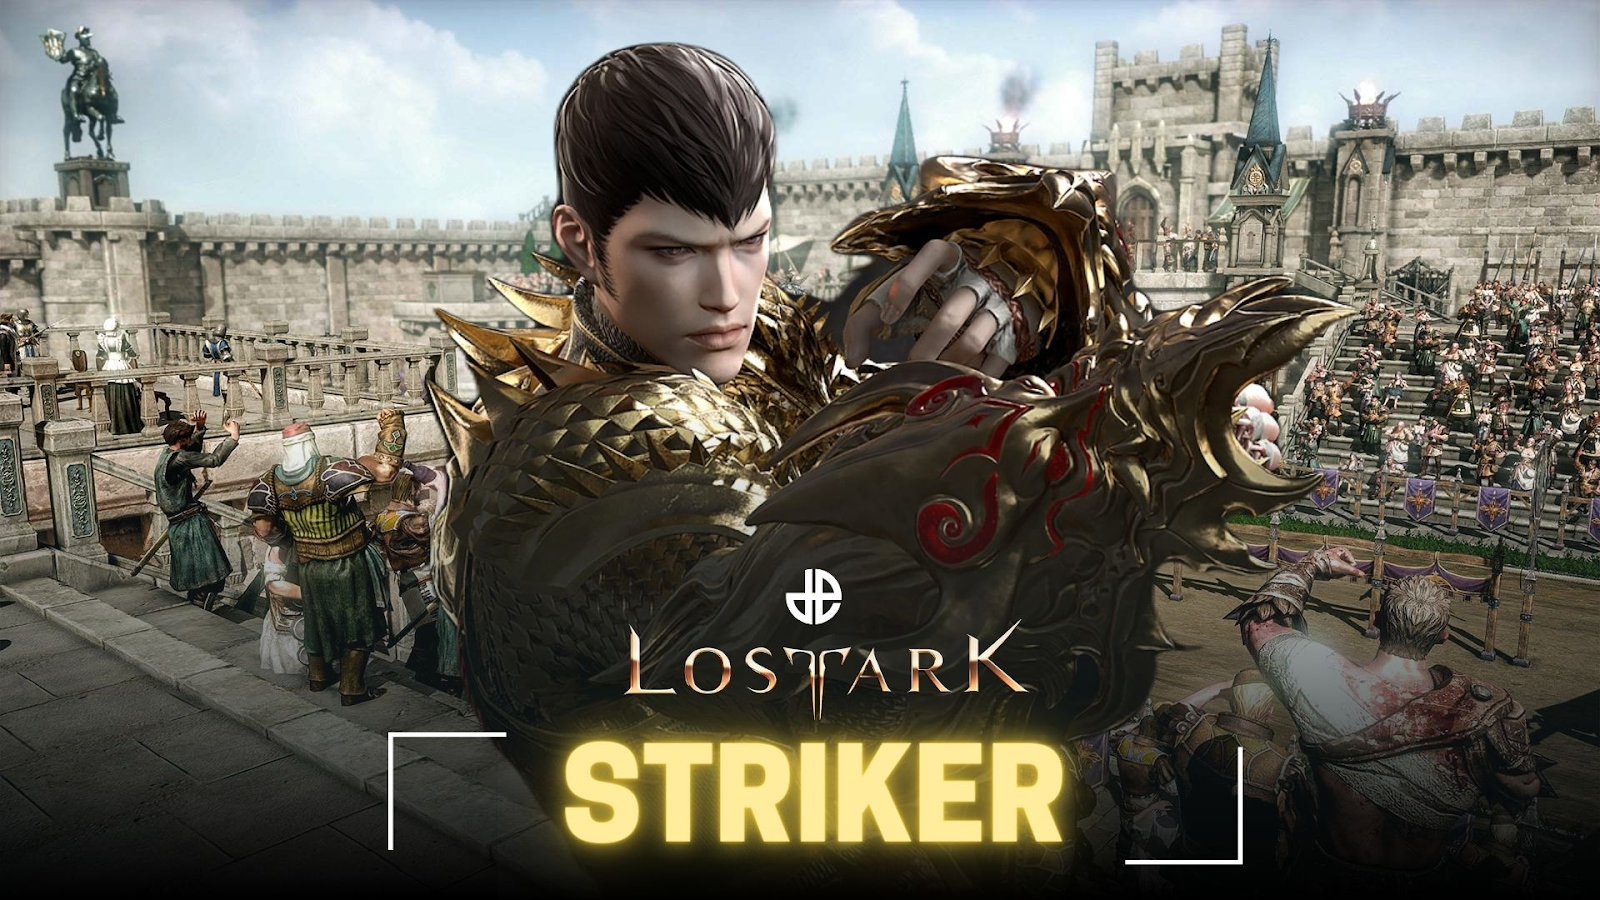 Lost Ark Striker presentation cover.